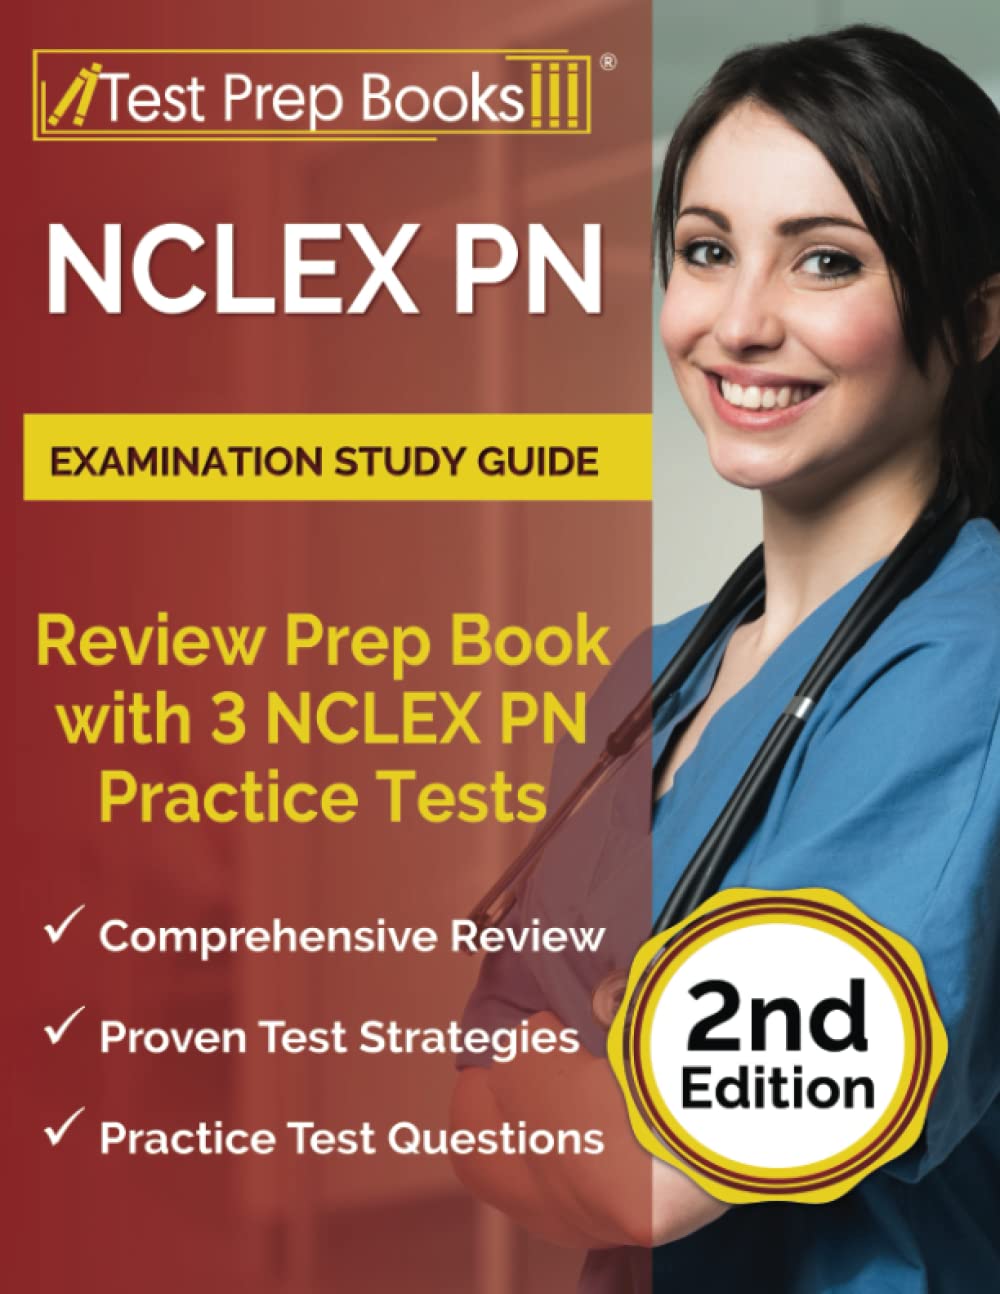 Mua NCLEX PN Examination Study Guide Review Prep Book with 3 NCLEX PN